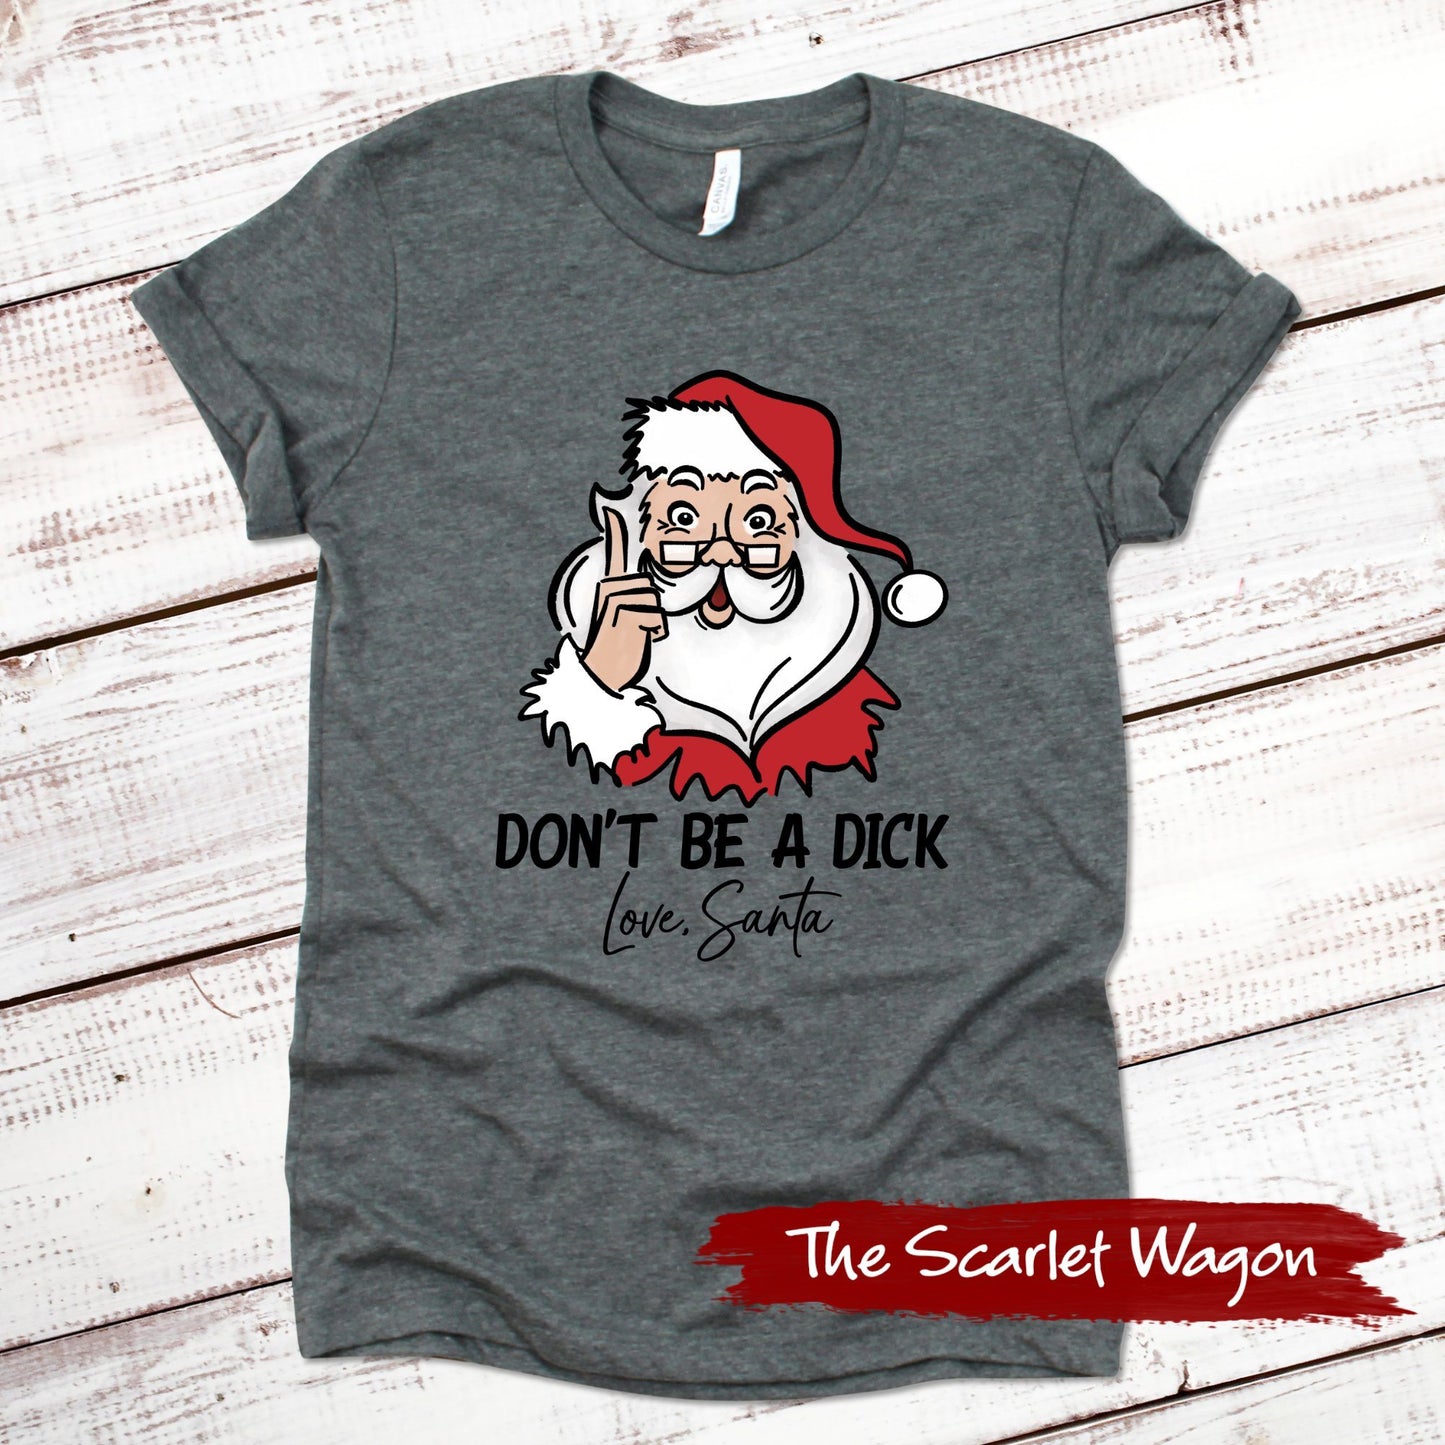 Don't Be a Dick - Love, Santa Christmas Shirt Scarlet Wagon Deep Heather Gray XS 